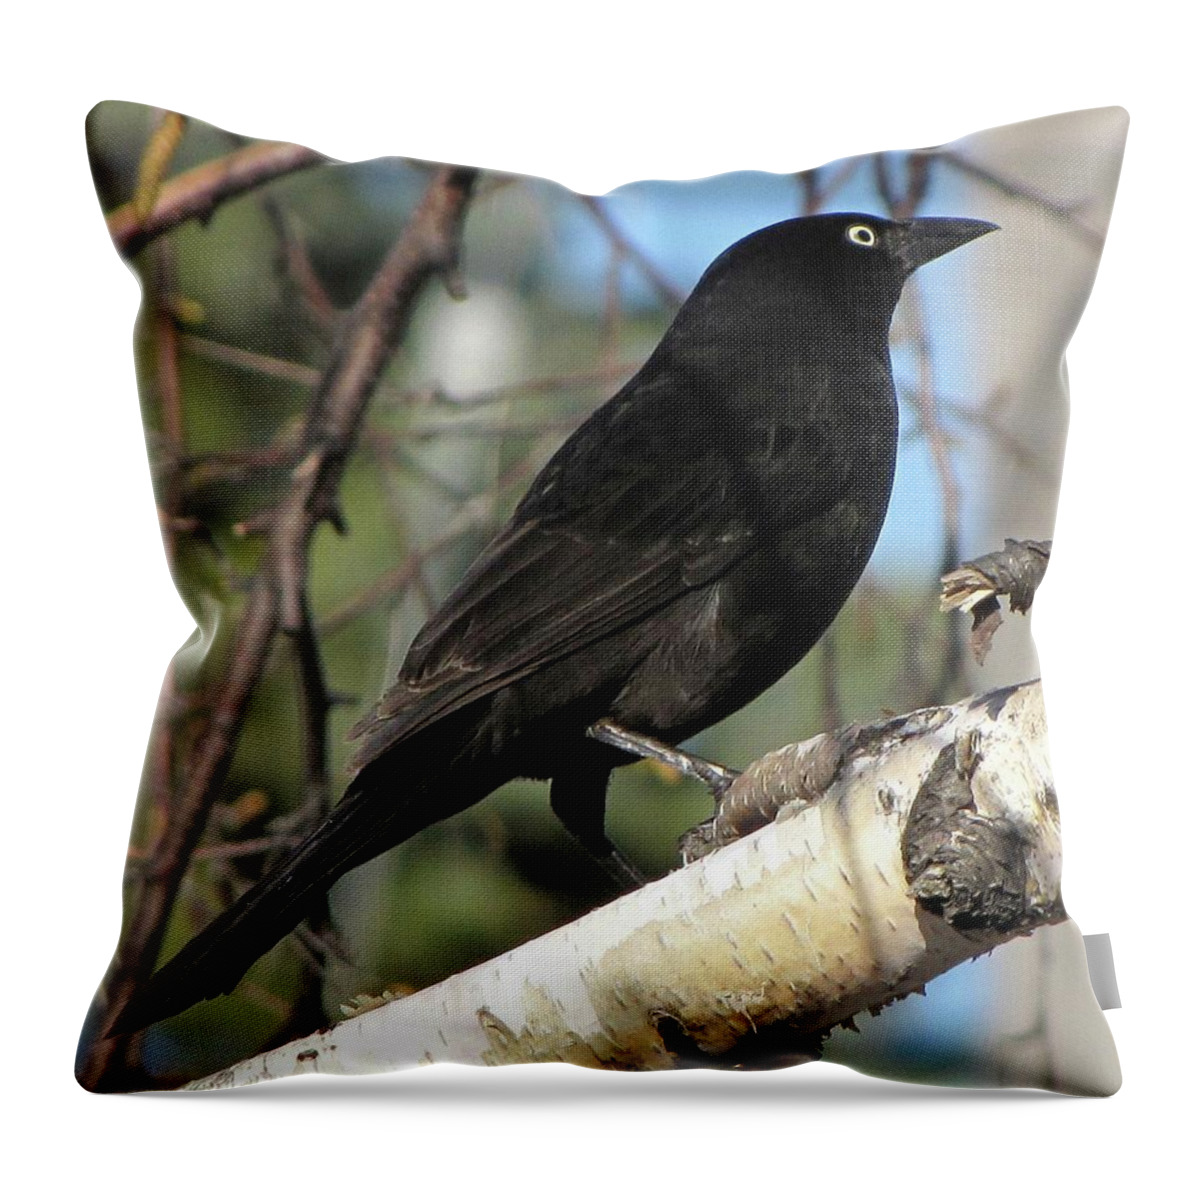 Black Throw Pillow featuring the photograph Blackbird by Cheryl Charette